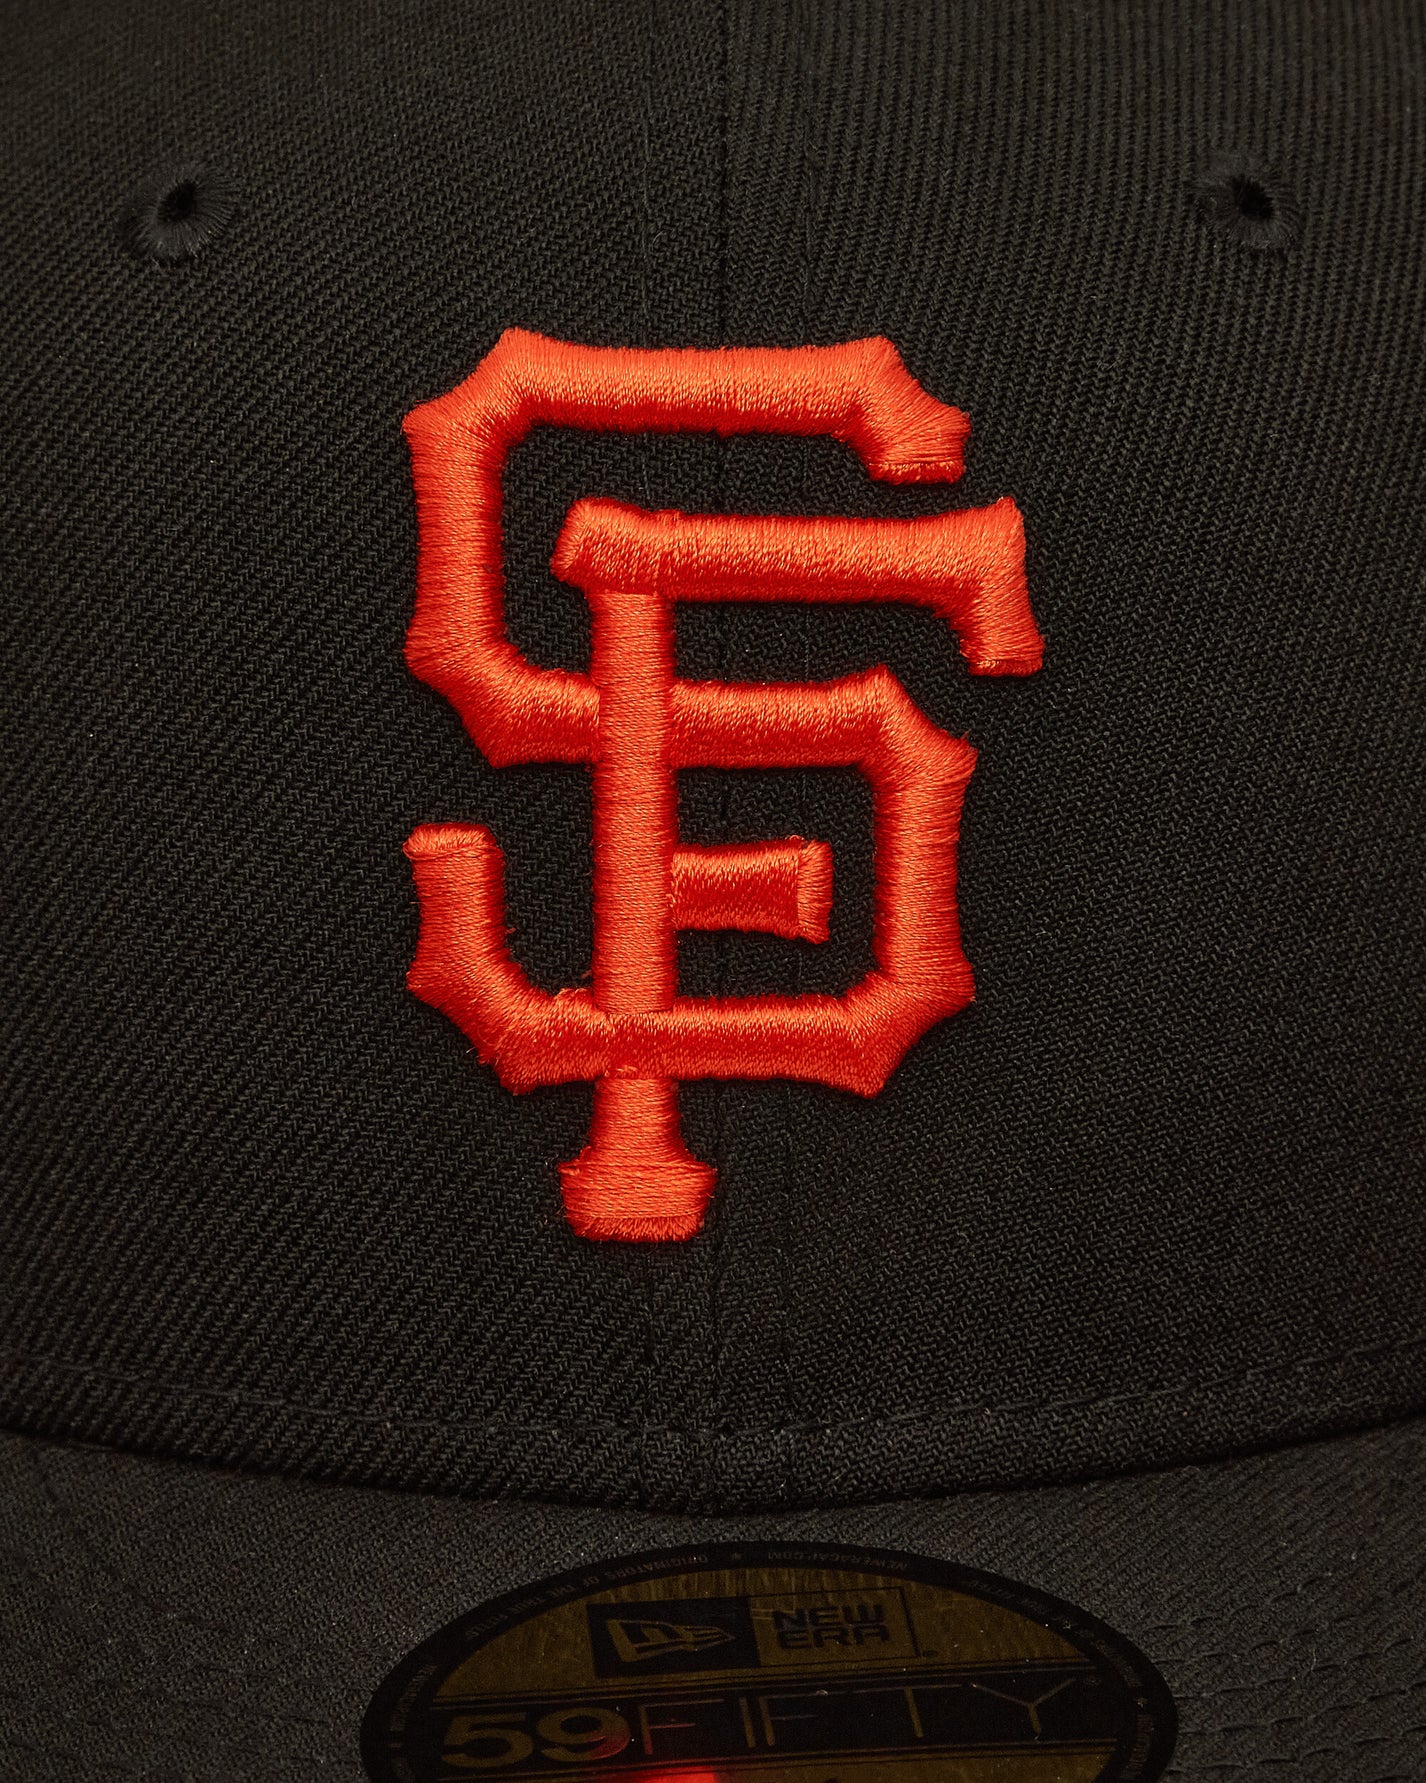 New Era 5950 San Francisco Giants Black Hats Caps 12572838 OTC